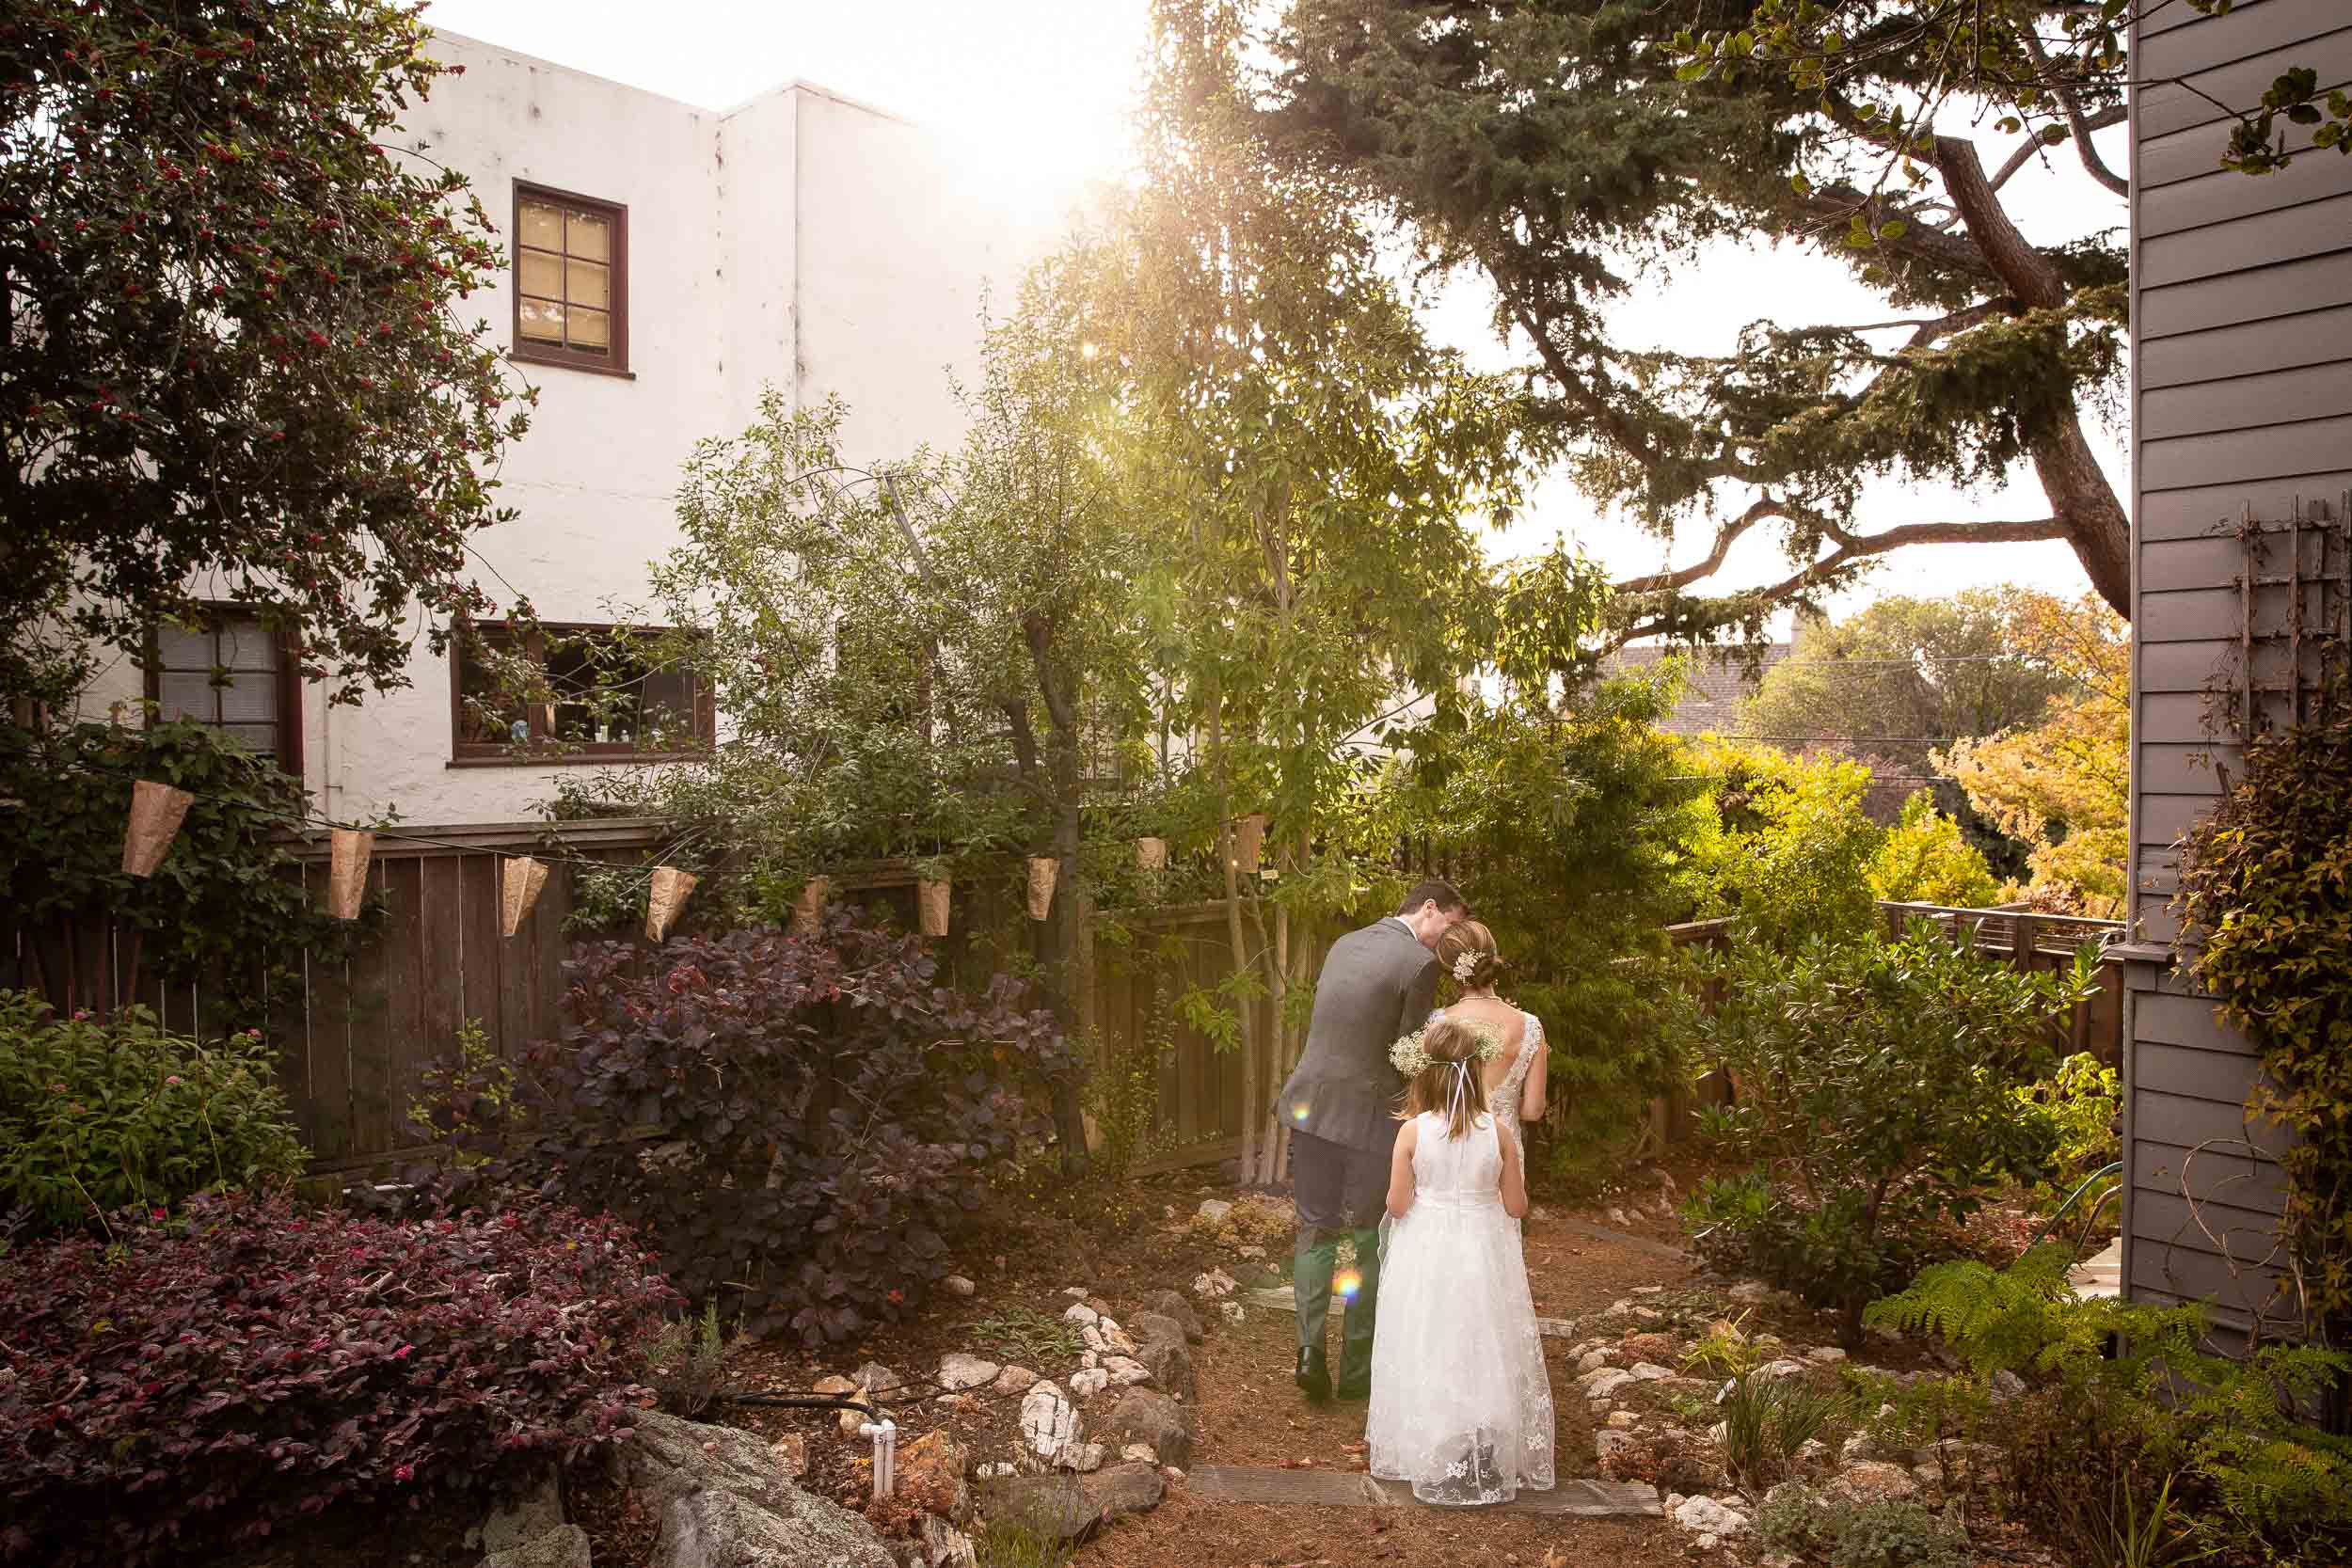 Small Berkeley Wedding in Backyard